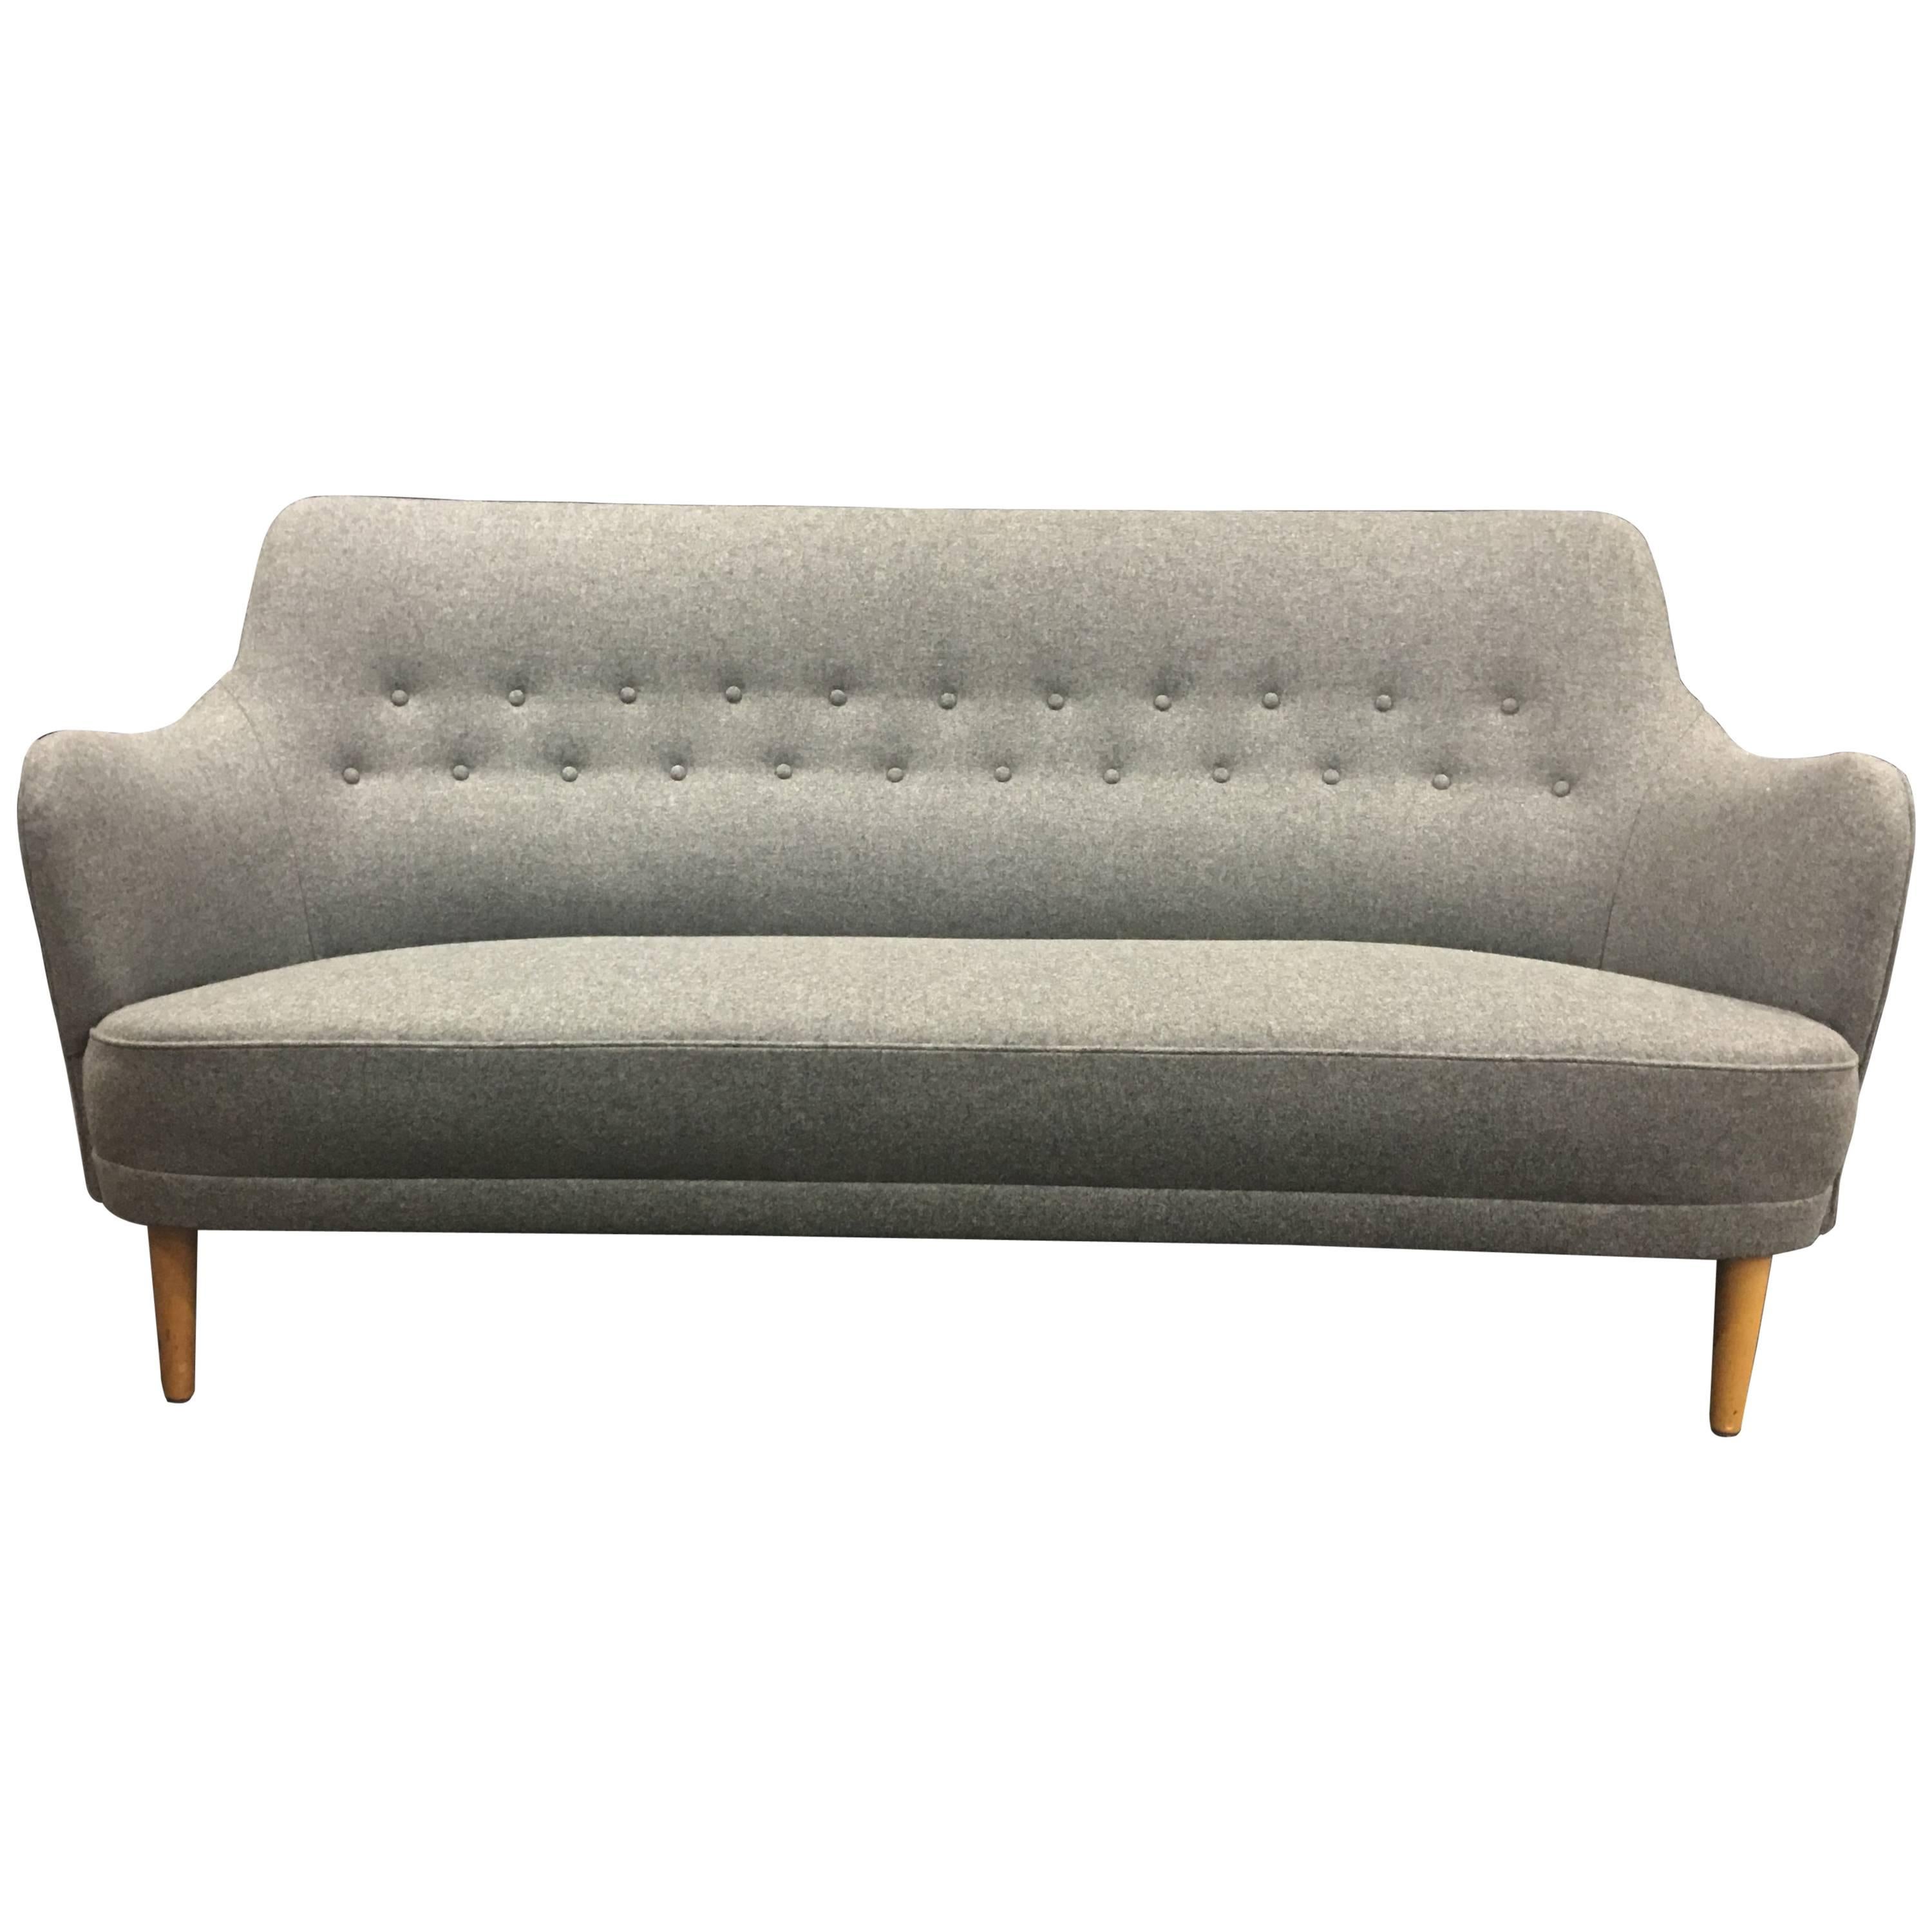 Three-Seat Sofa by Carl Malmsten for OH Sjogren in Fresh New Grey Wool